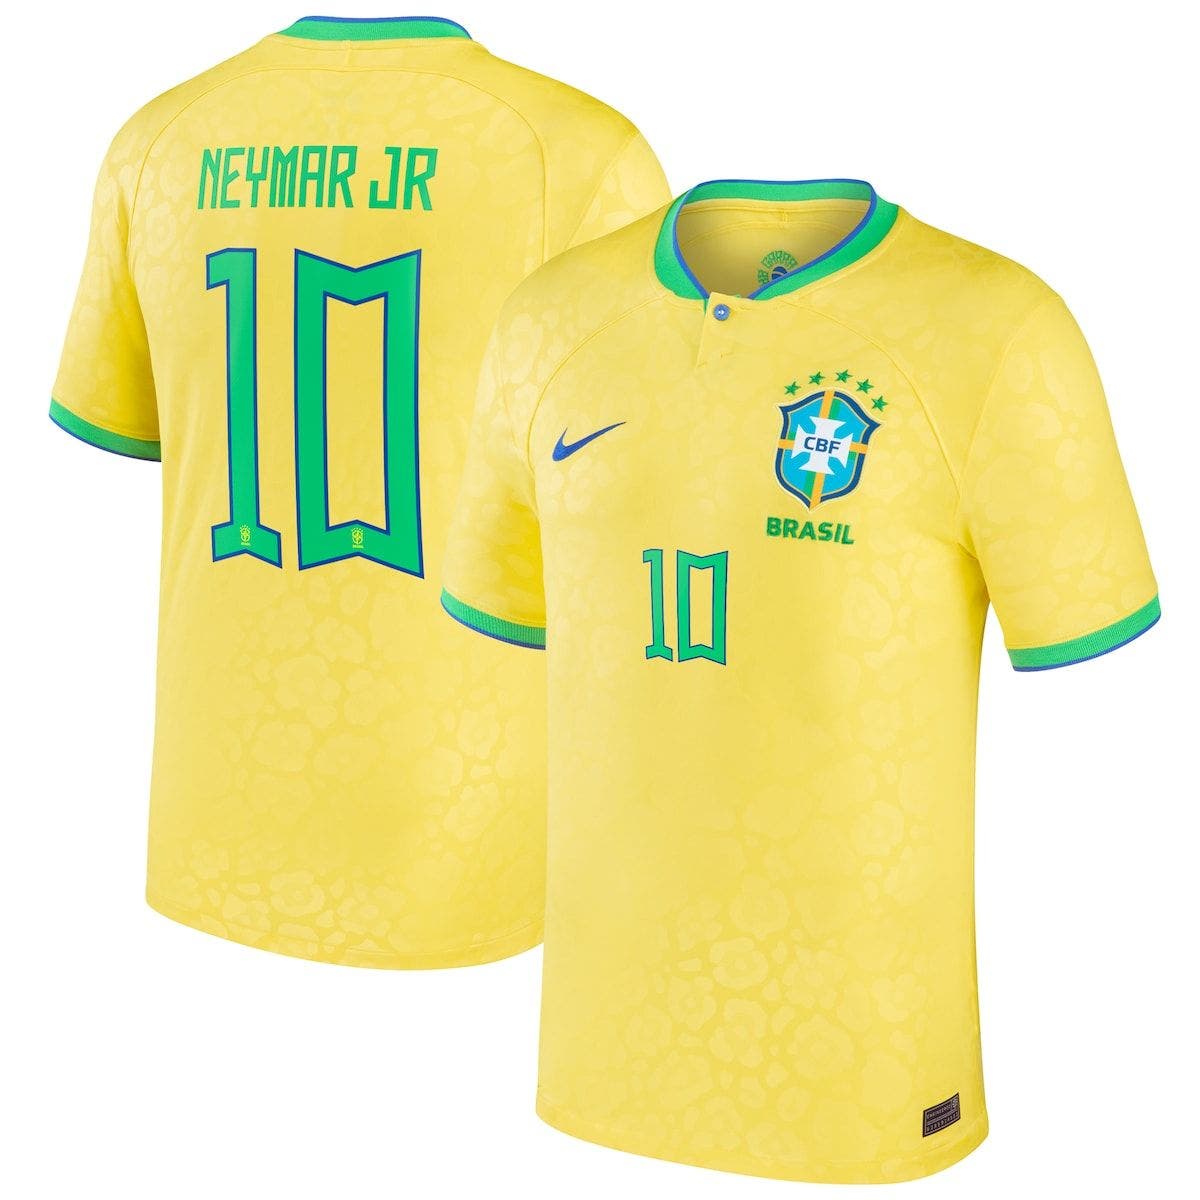 buy brazil soccer jersey